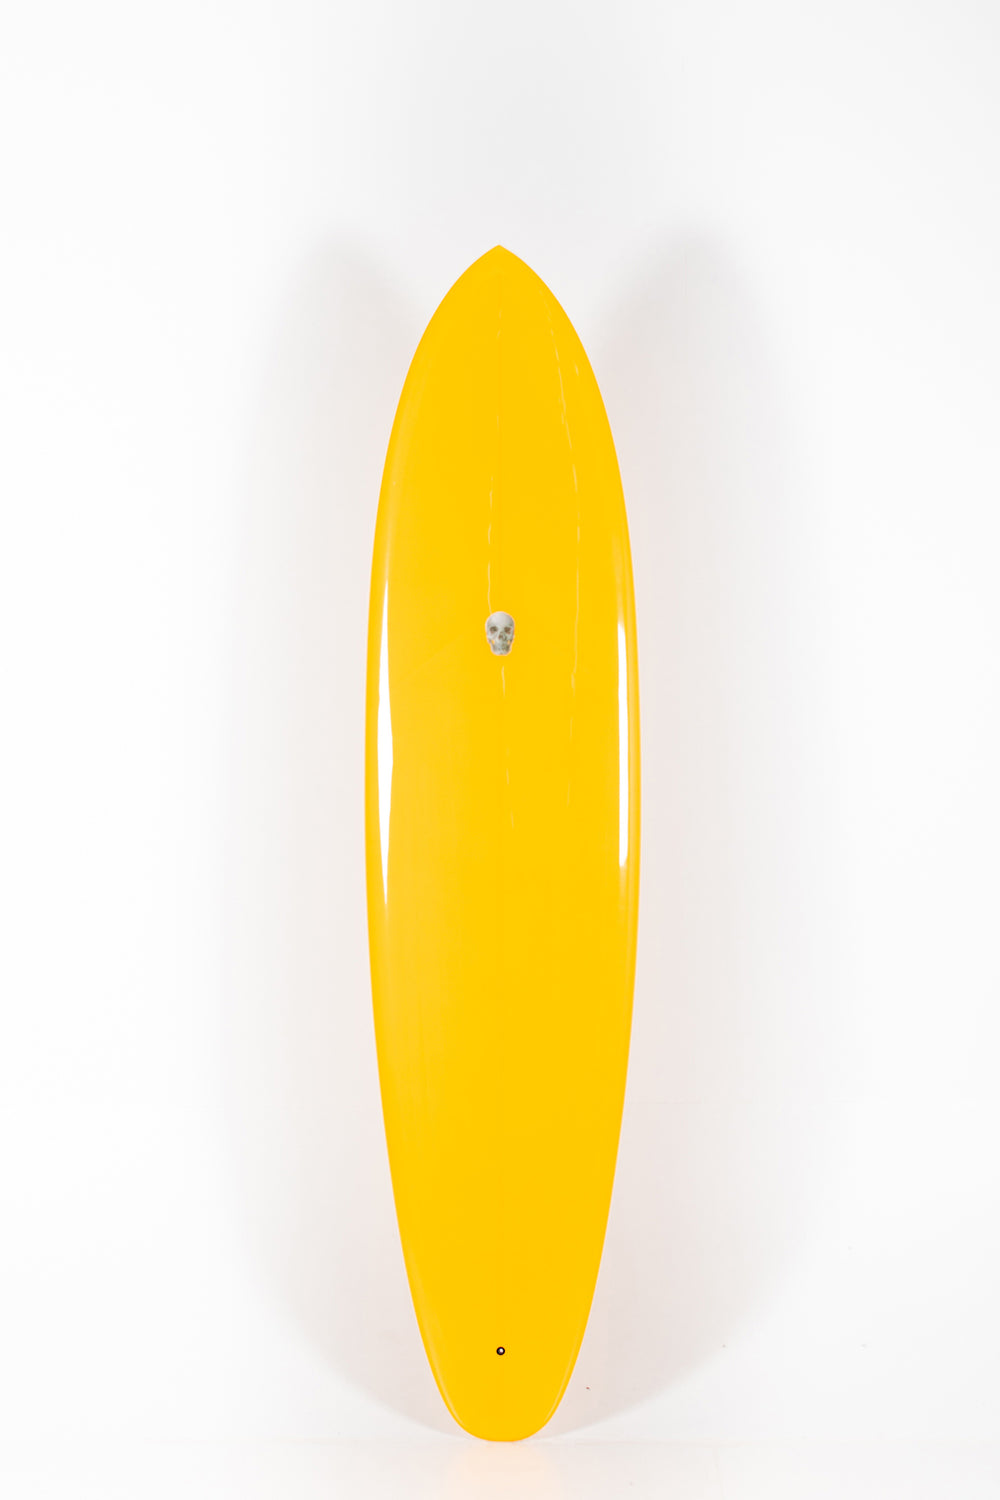 Pukas Surf shop - Christenson Surfboards - FLAT TRACKER 2.0 - 7'6